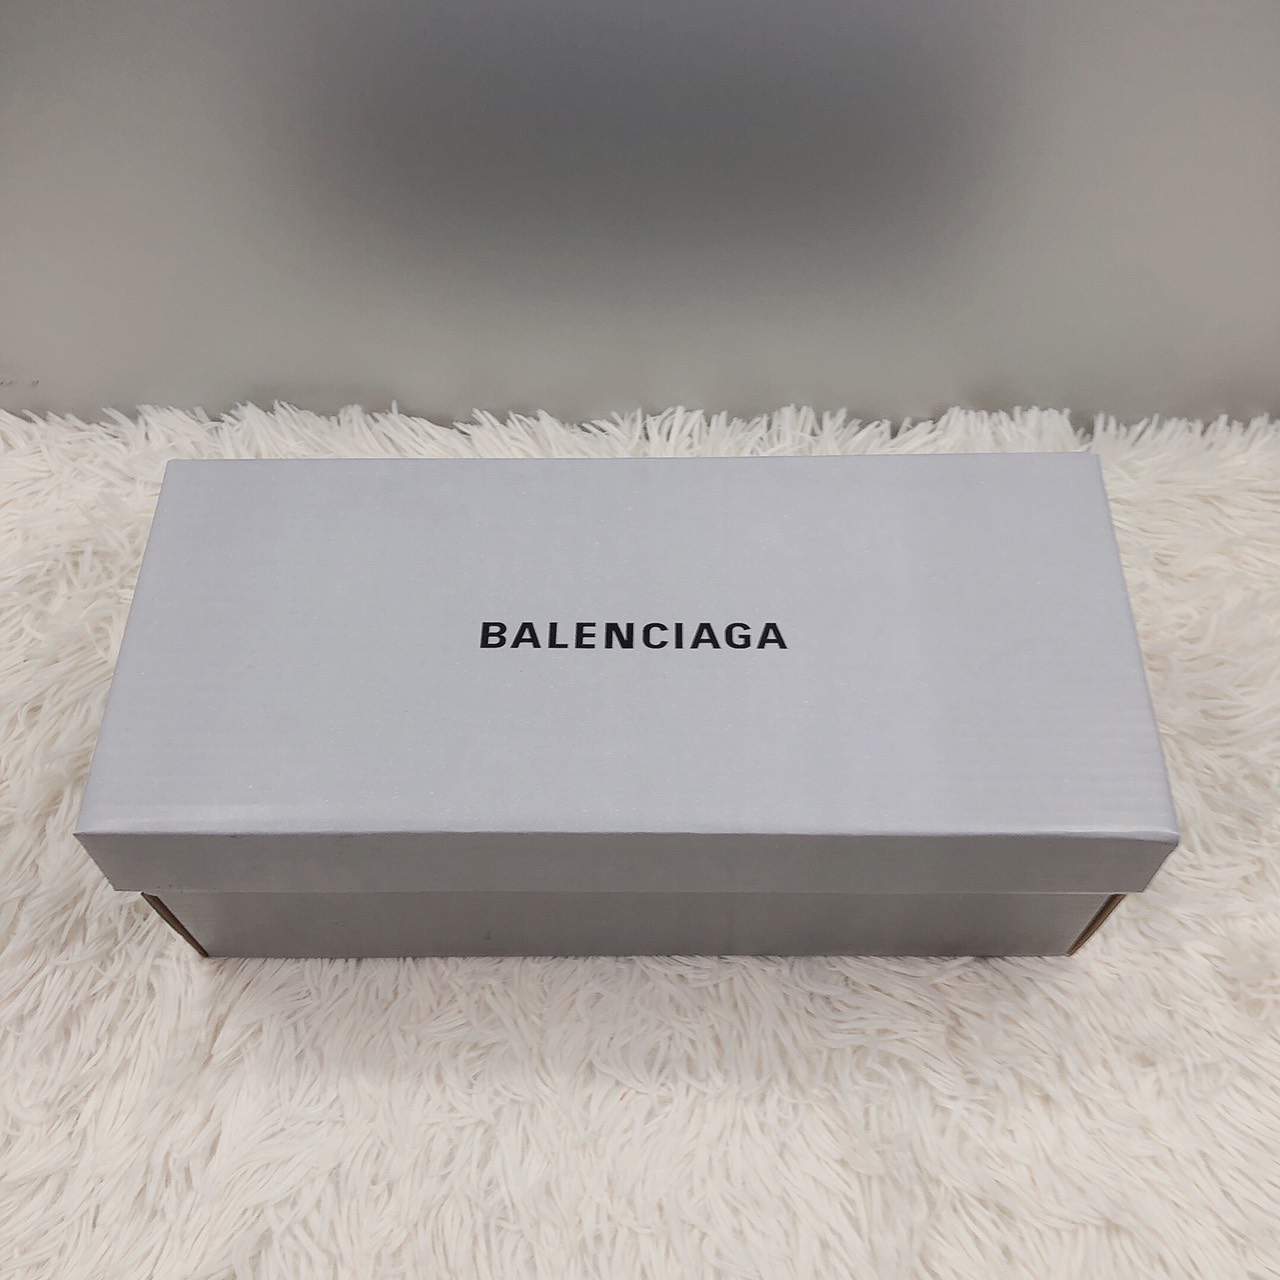 BALENCIAGA EMPTY GIFT BOX 16 cm x 16 cm x 4 cm 600  PicClick UK